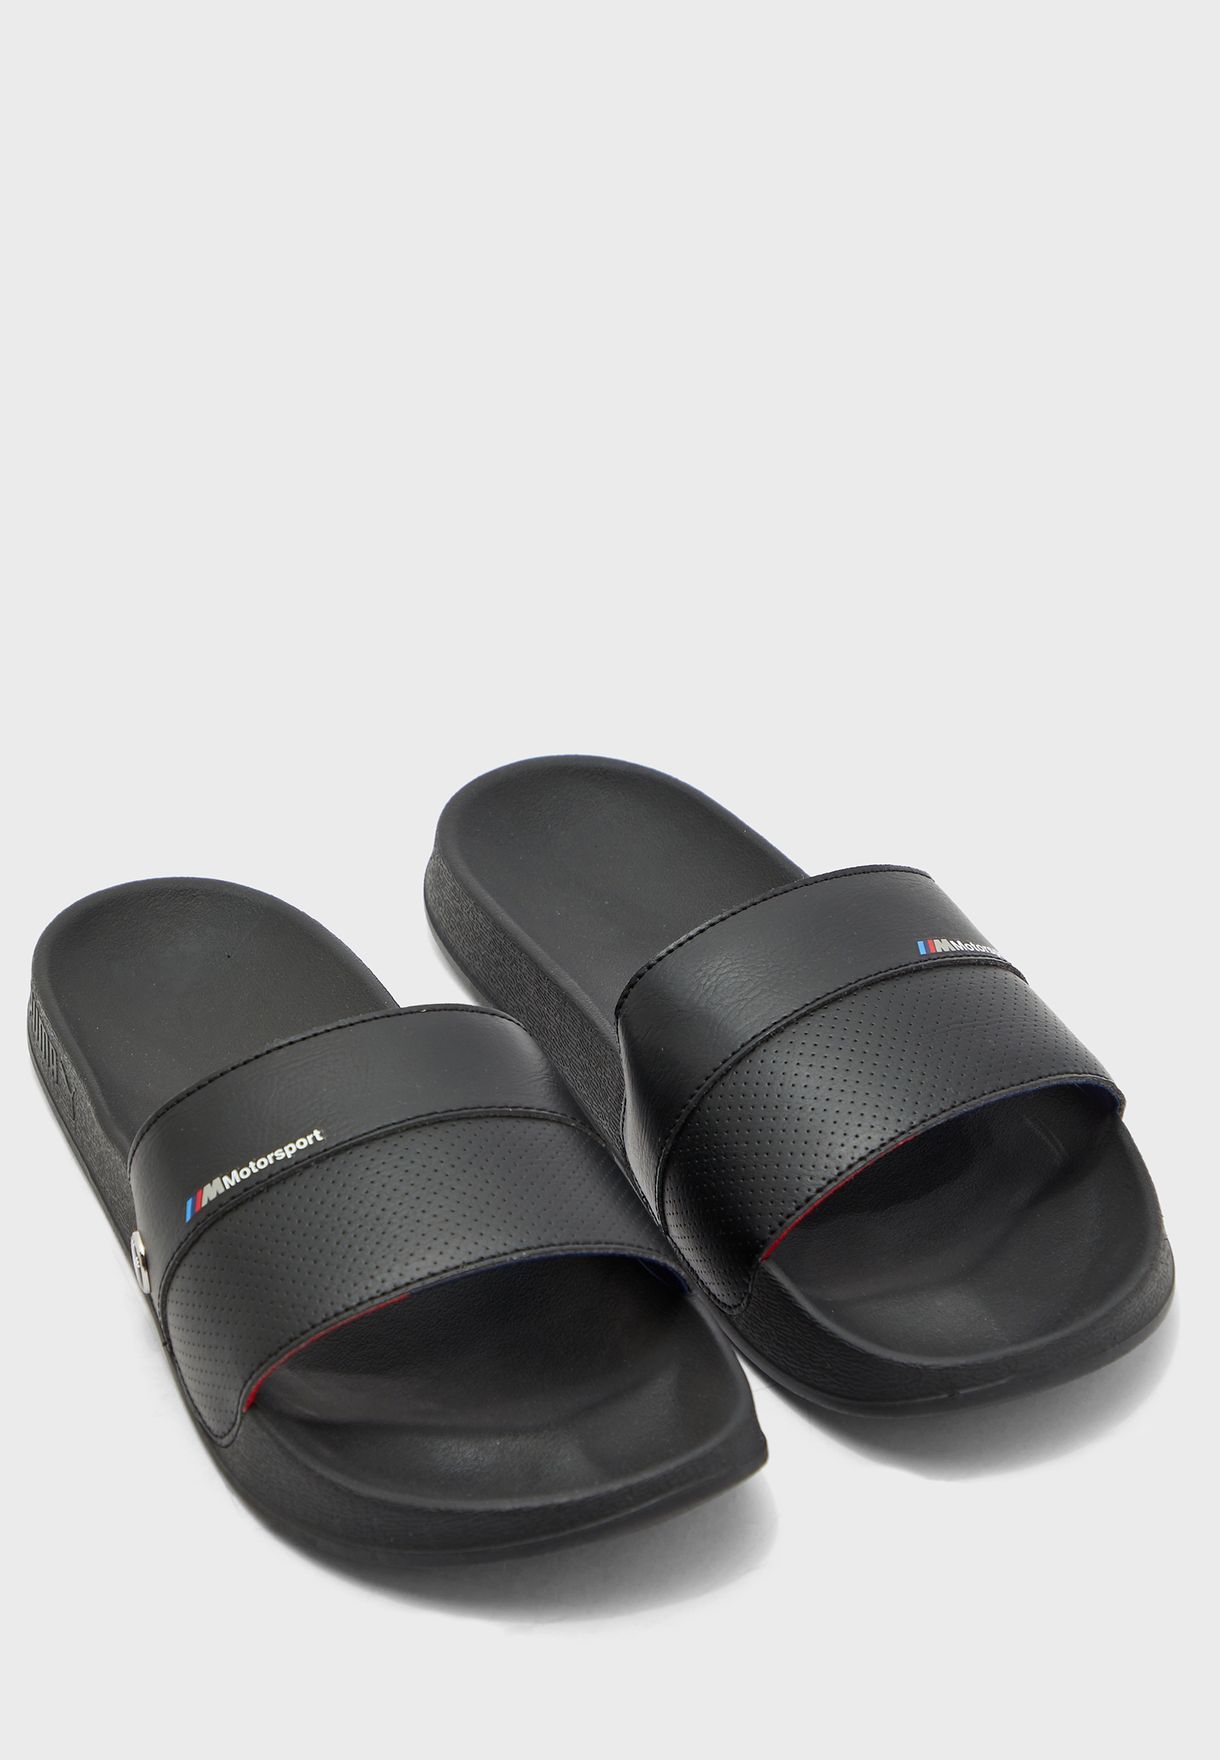 puma bmw slippers off 56% - www 